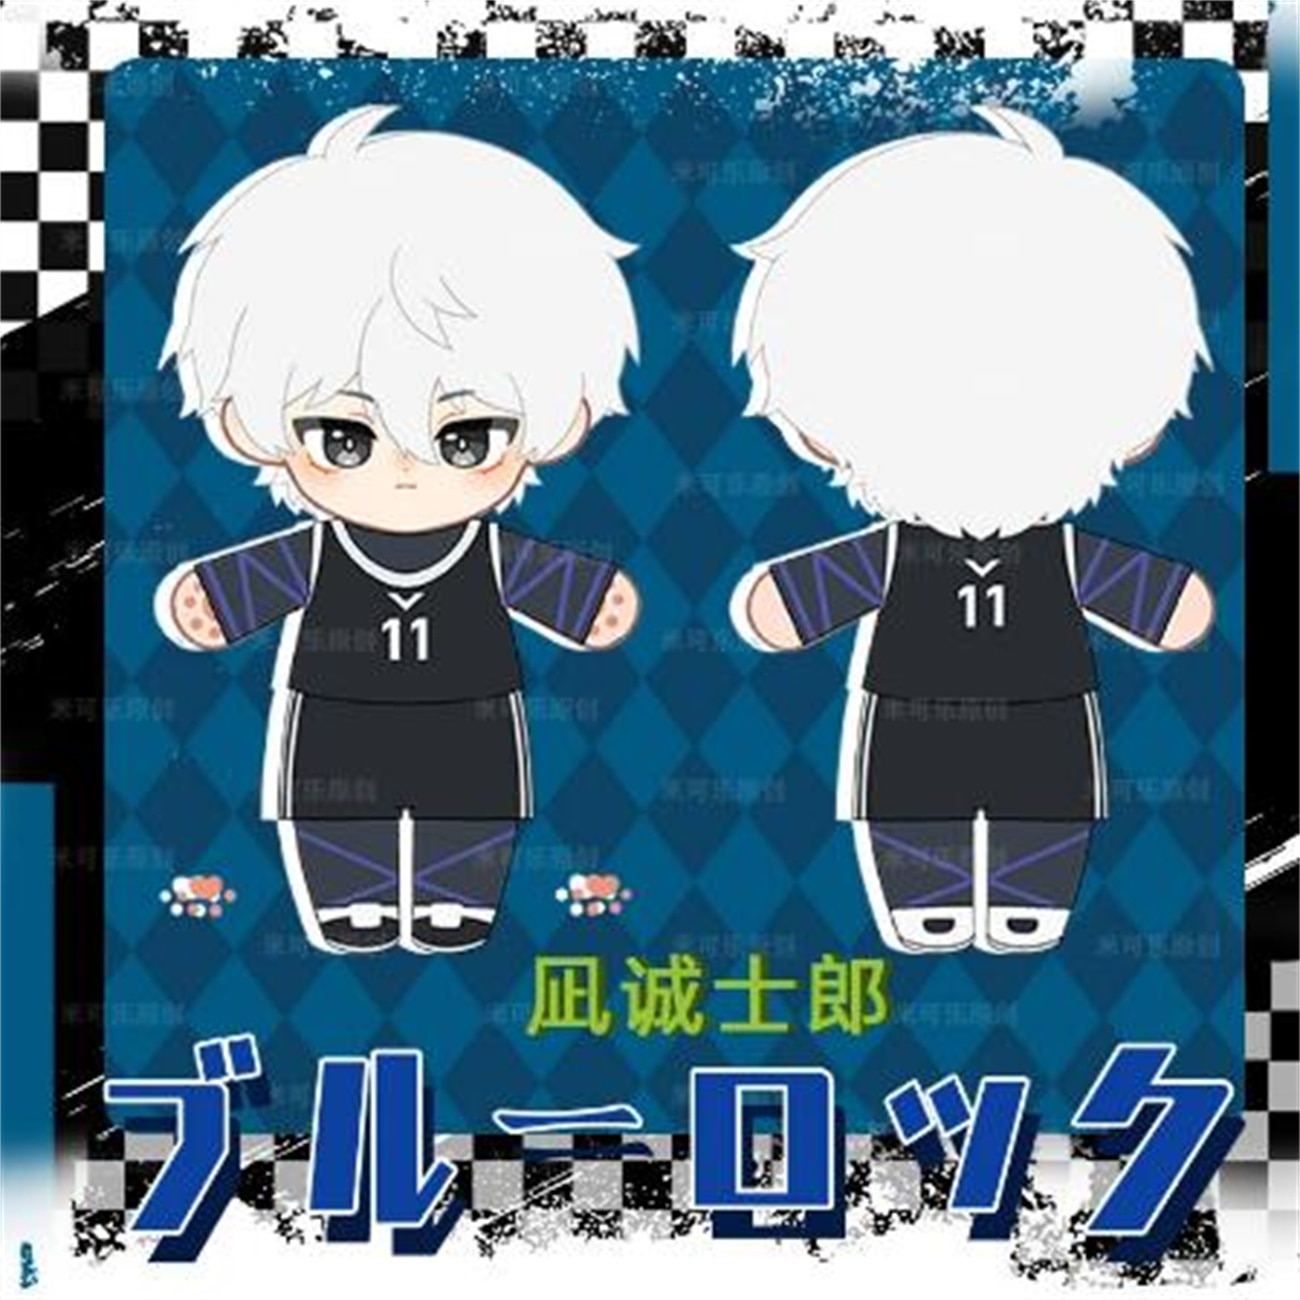 Cosmile Anime Blue Lock Nagi Seishiro Seishirou Stuffed Plushie 20cm Plush Doll Toy Body Clothes 1 - Blue Lock Plush